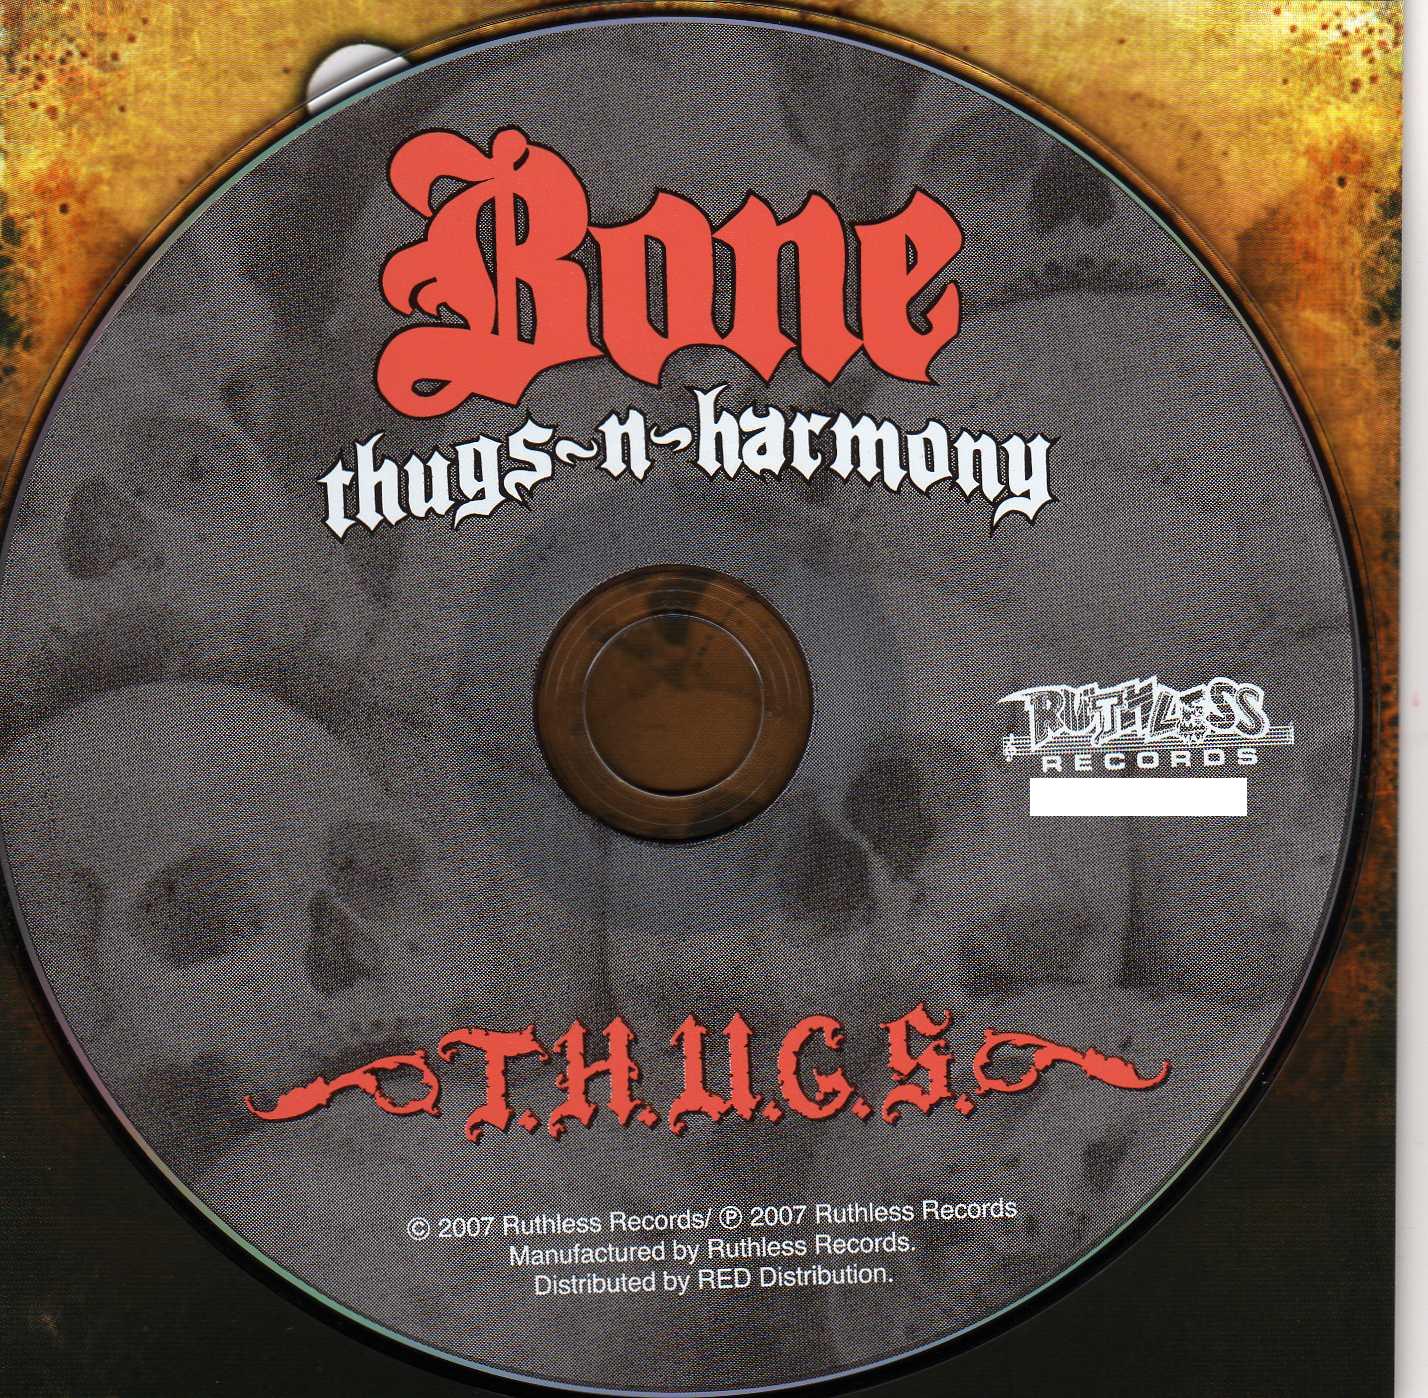 Bone harmony